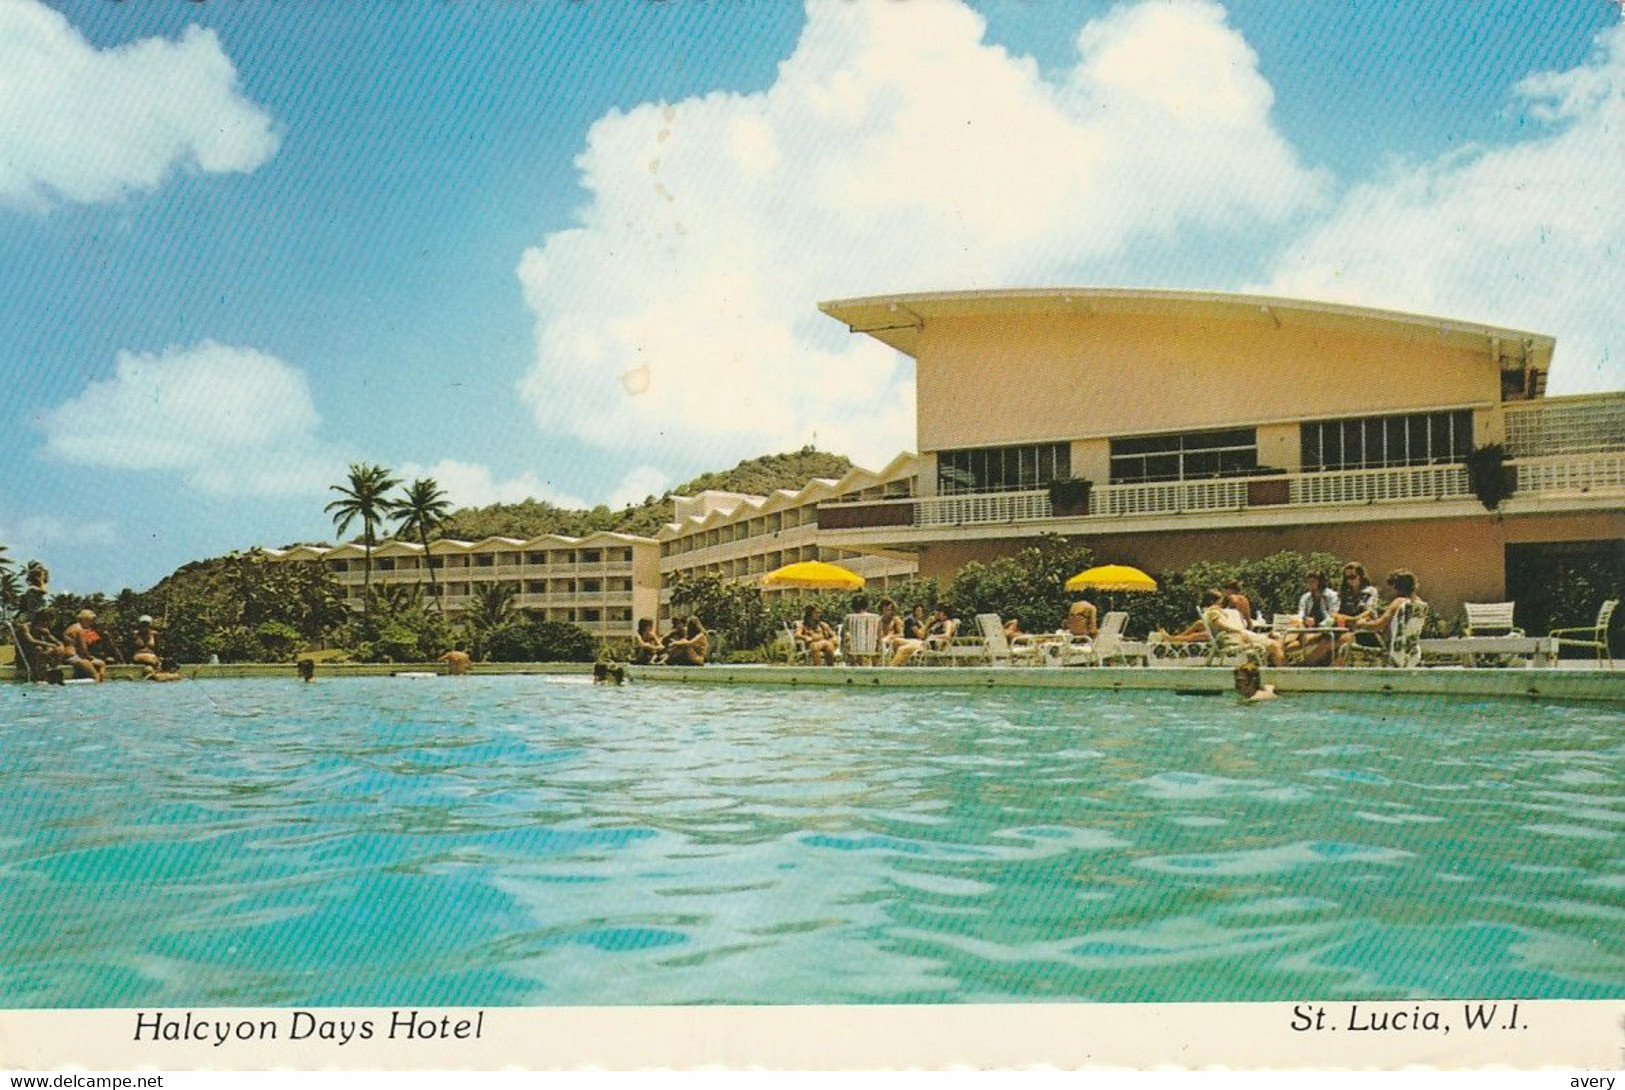 Halcyon Days Hotel, St. Lucia, West Indies - Sainte-Lucie